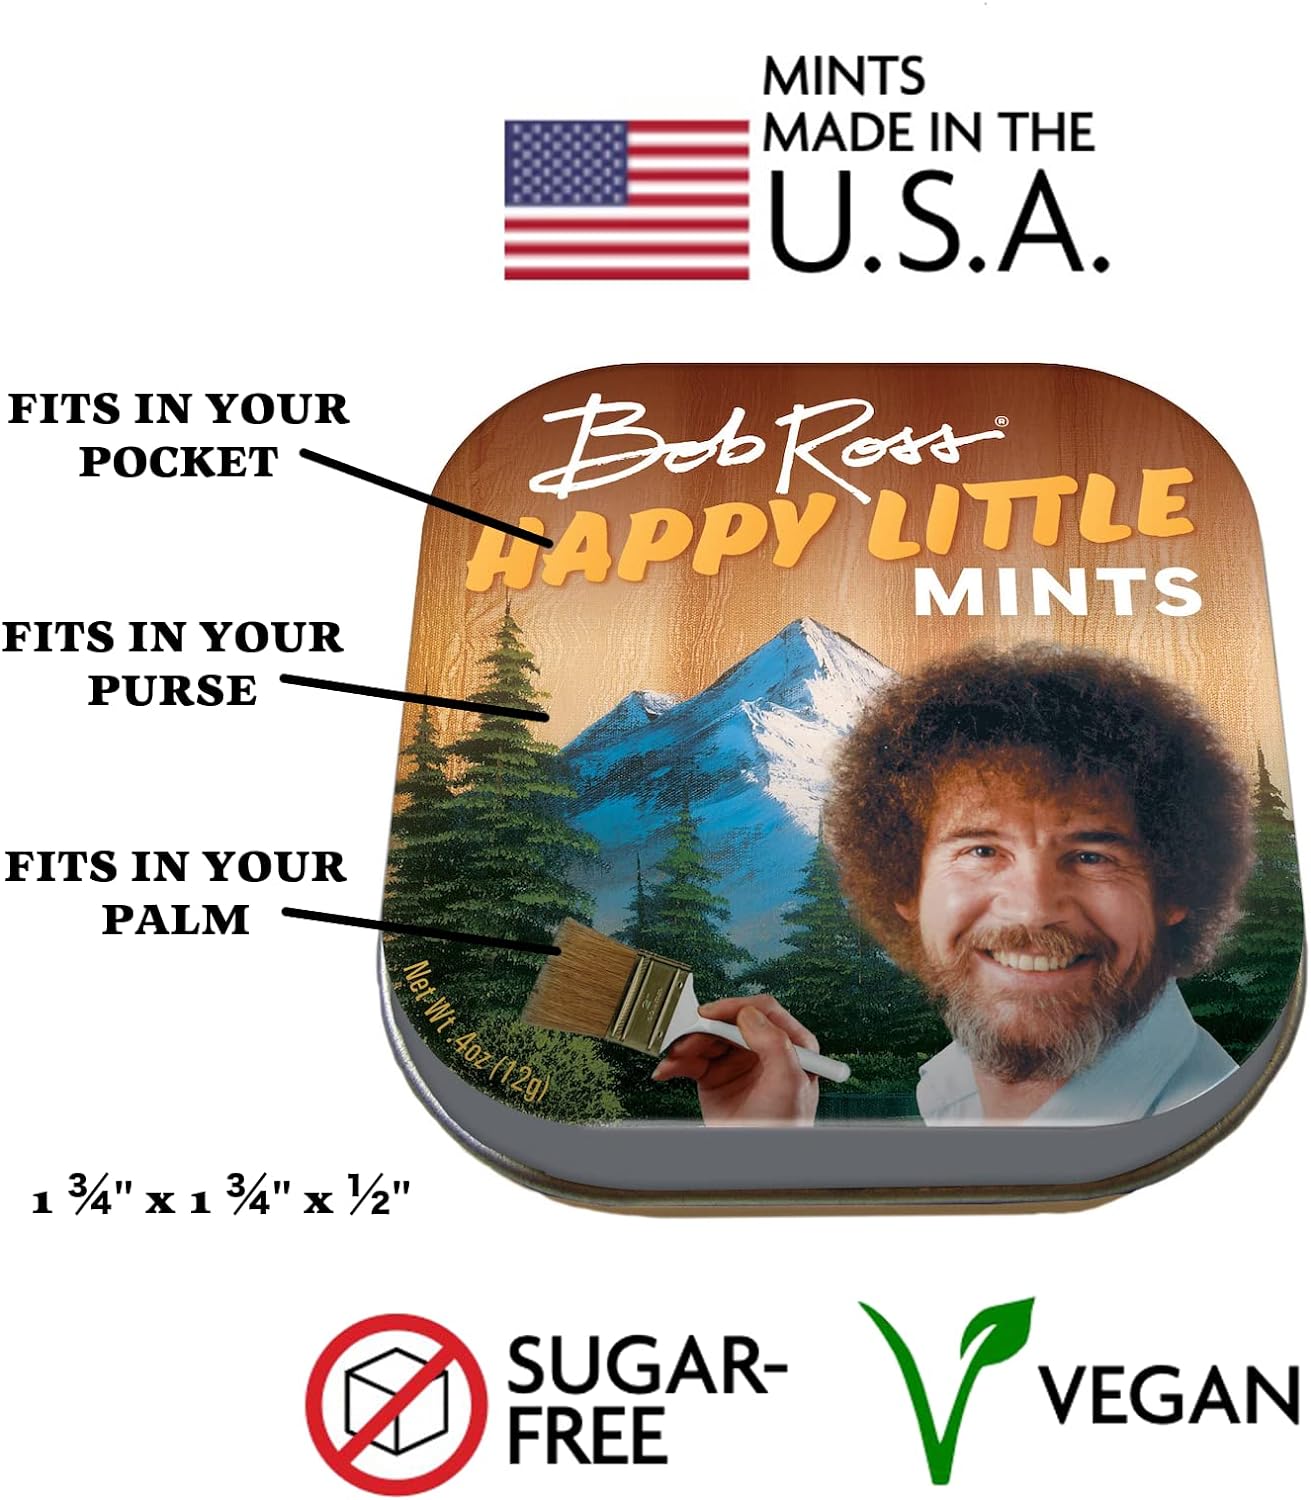  Bob Ross Happy Little Breath Mints,1 Tin, Net Wt 4oz (12g) 